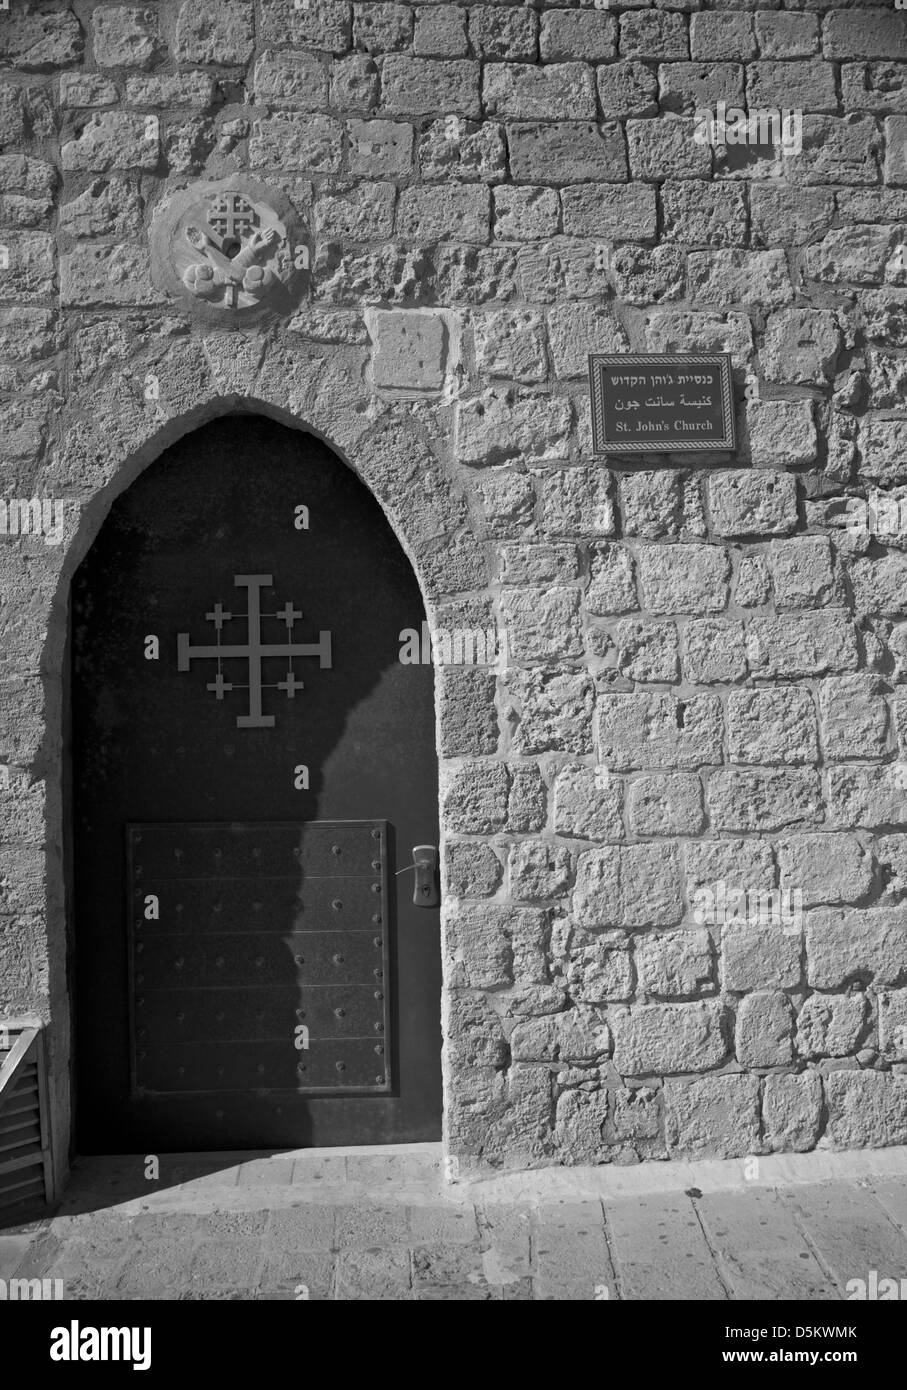 Doorway of St Johns Church,Catholic church, Akko,Israel (Acre) Stock Photo